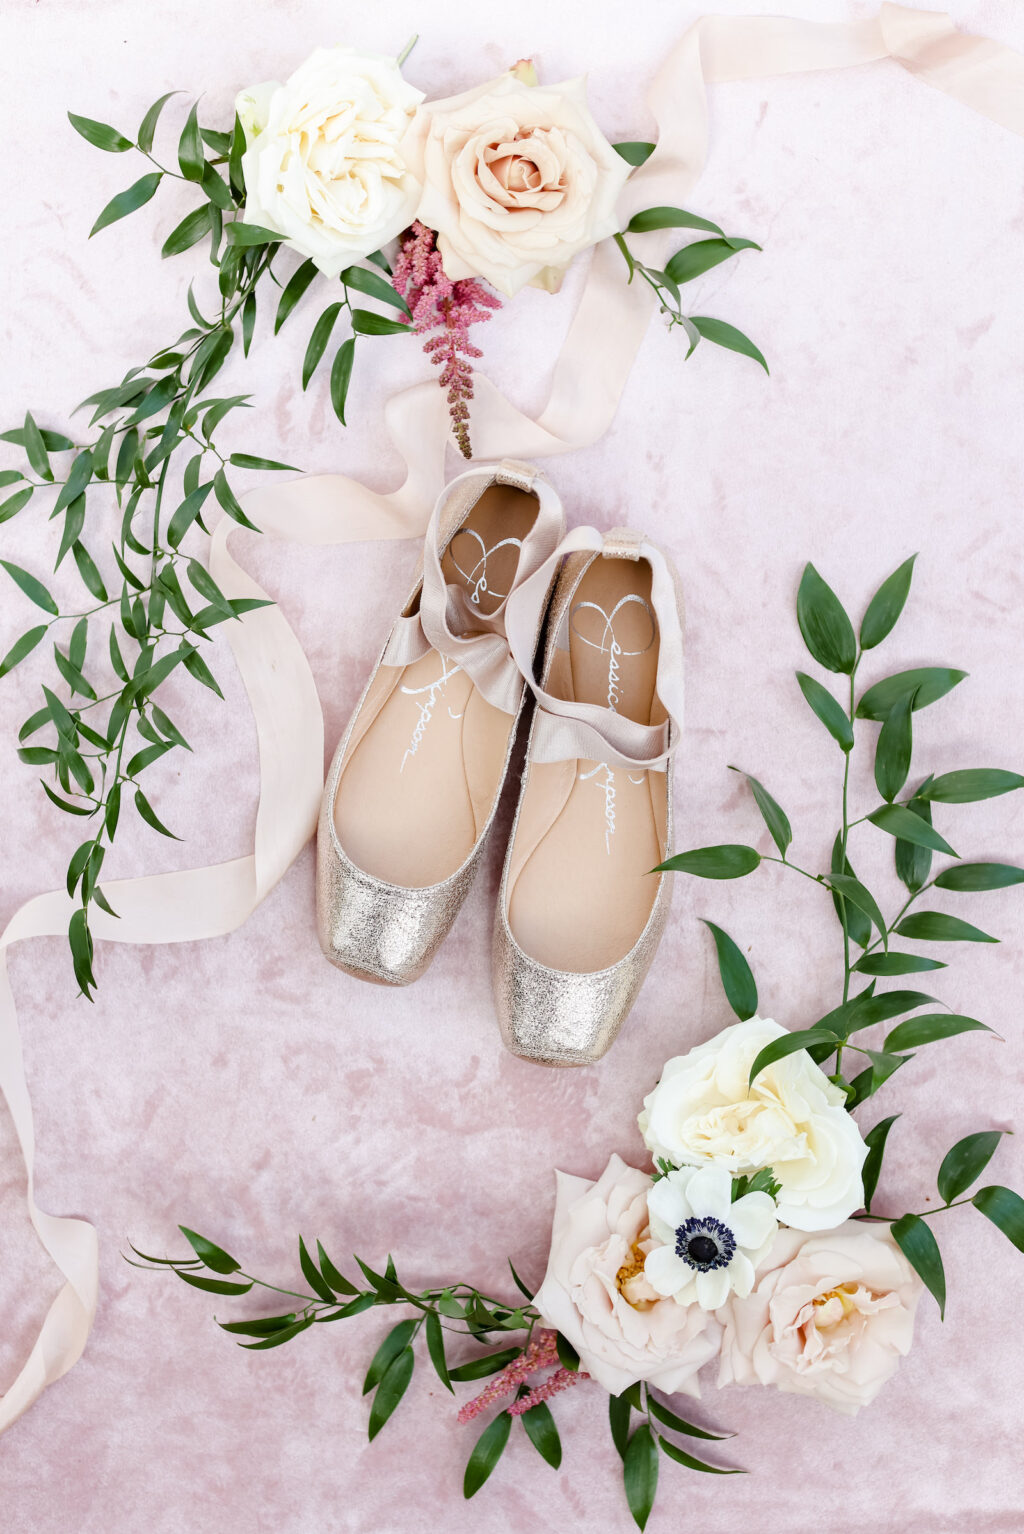 Champagne Gold Ballet Falt Jessica Simpson Bridal Wedding Shoes | Tampa Bay Wedding Photographer Lifelong Photography Studio